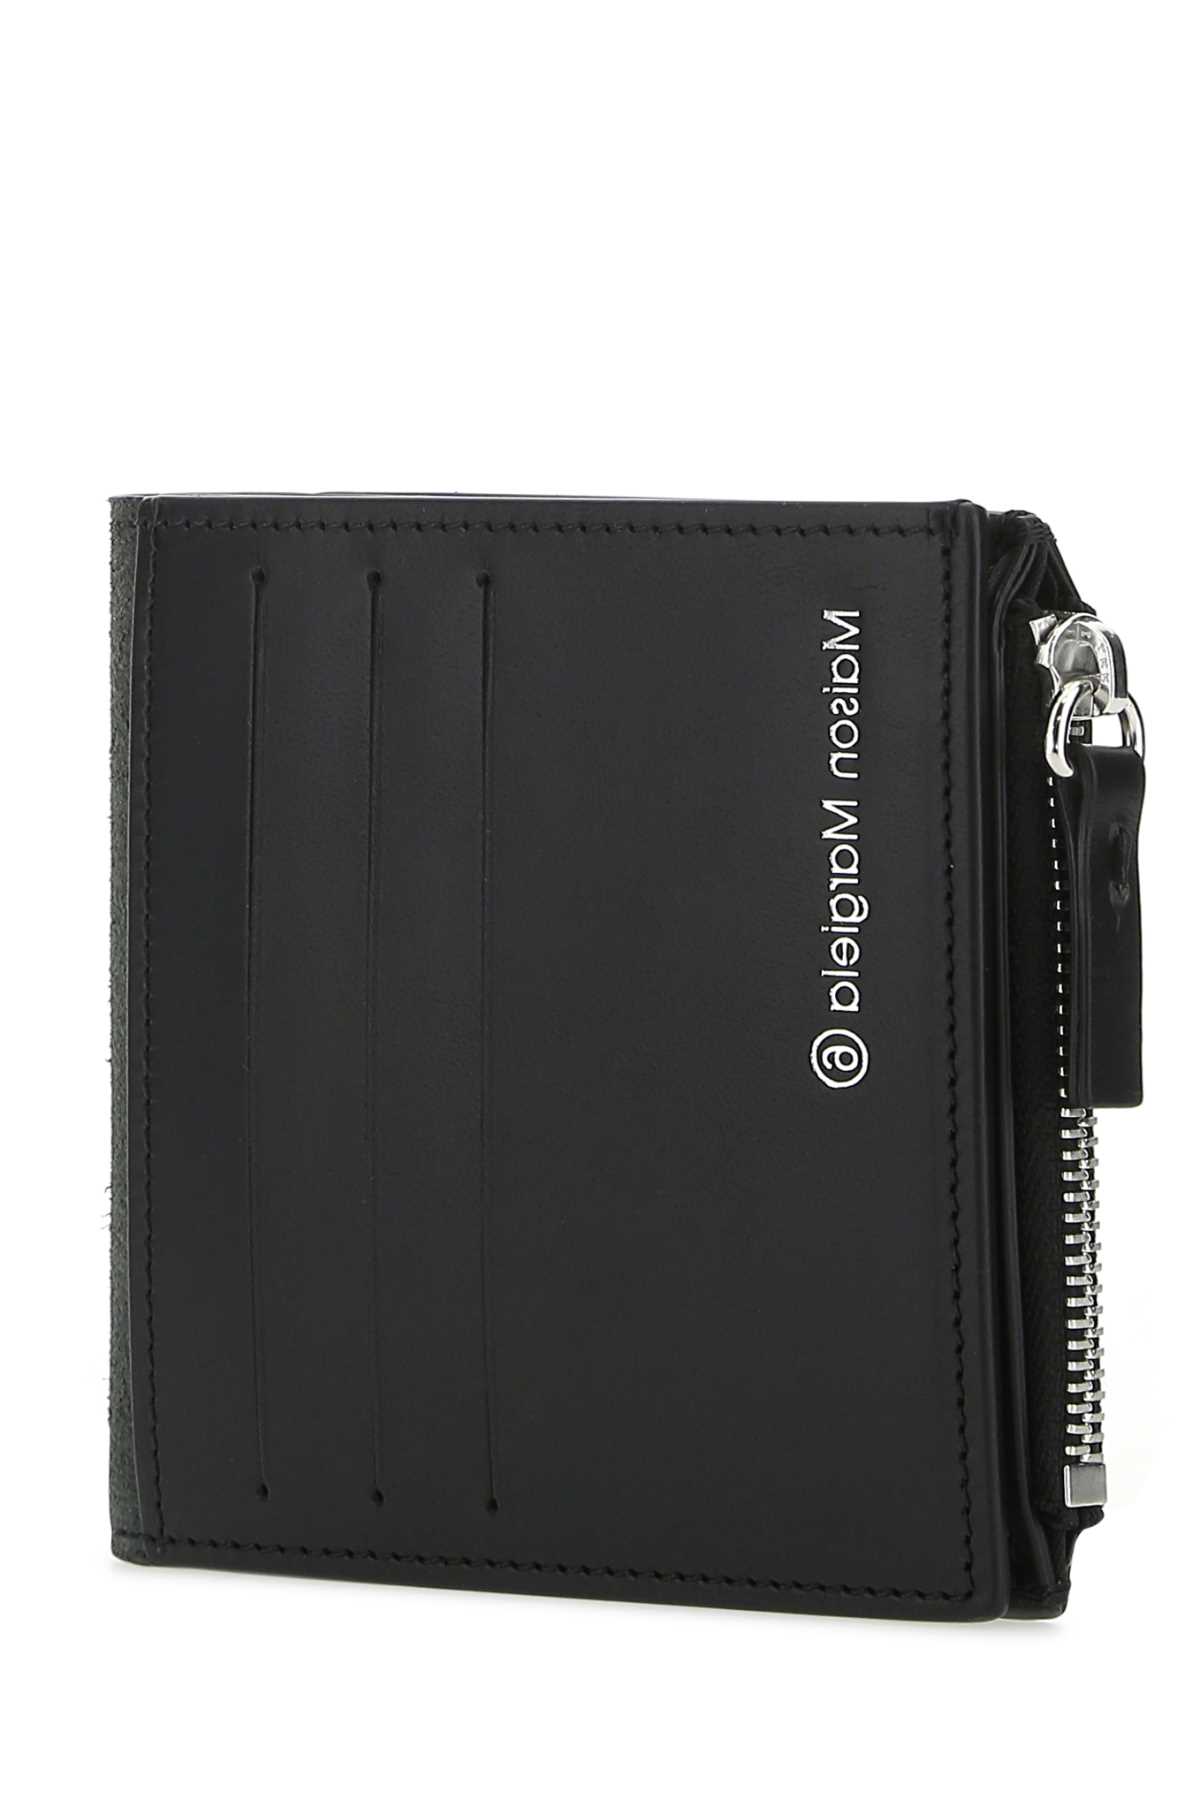 Shop Mm6 Maison Margiela Black Leather Wallet In T8013